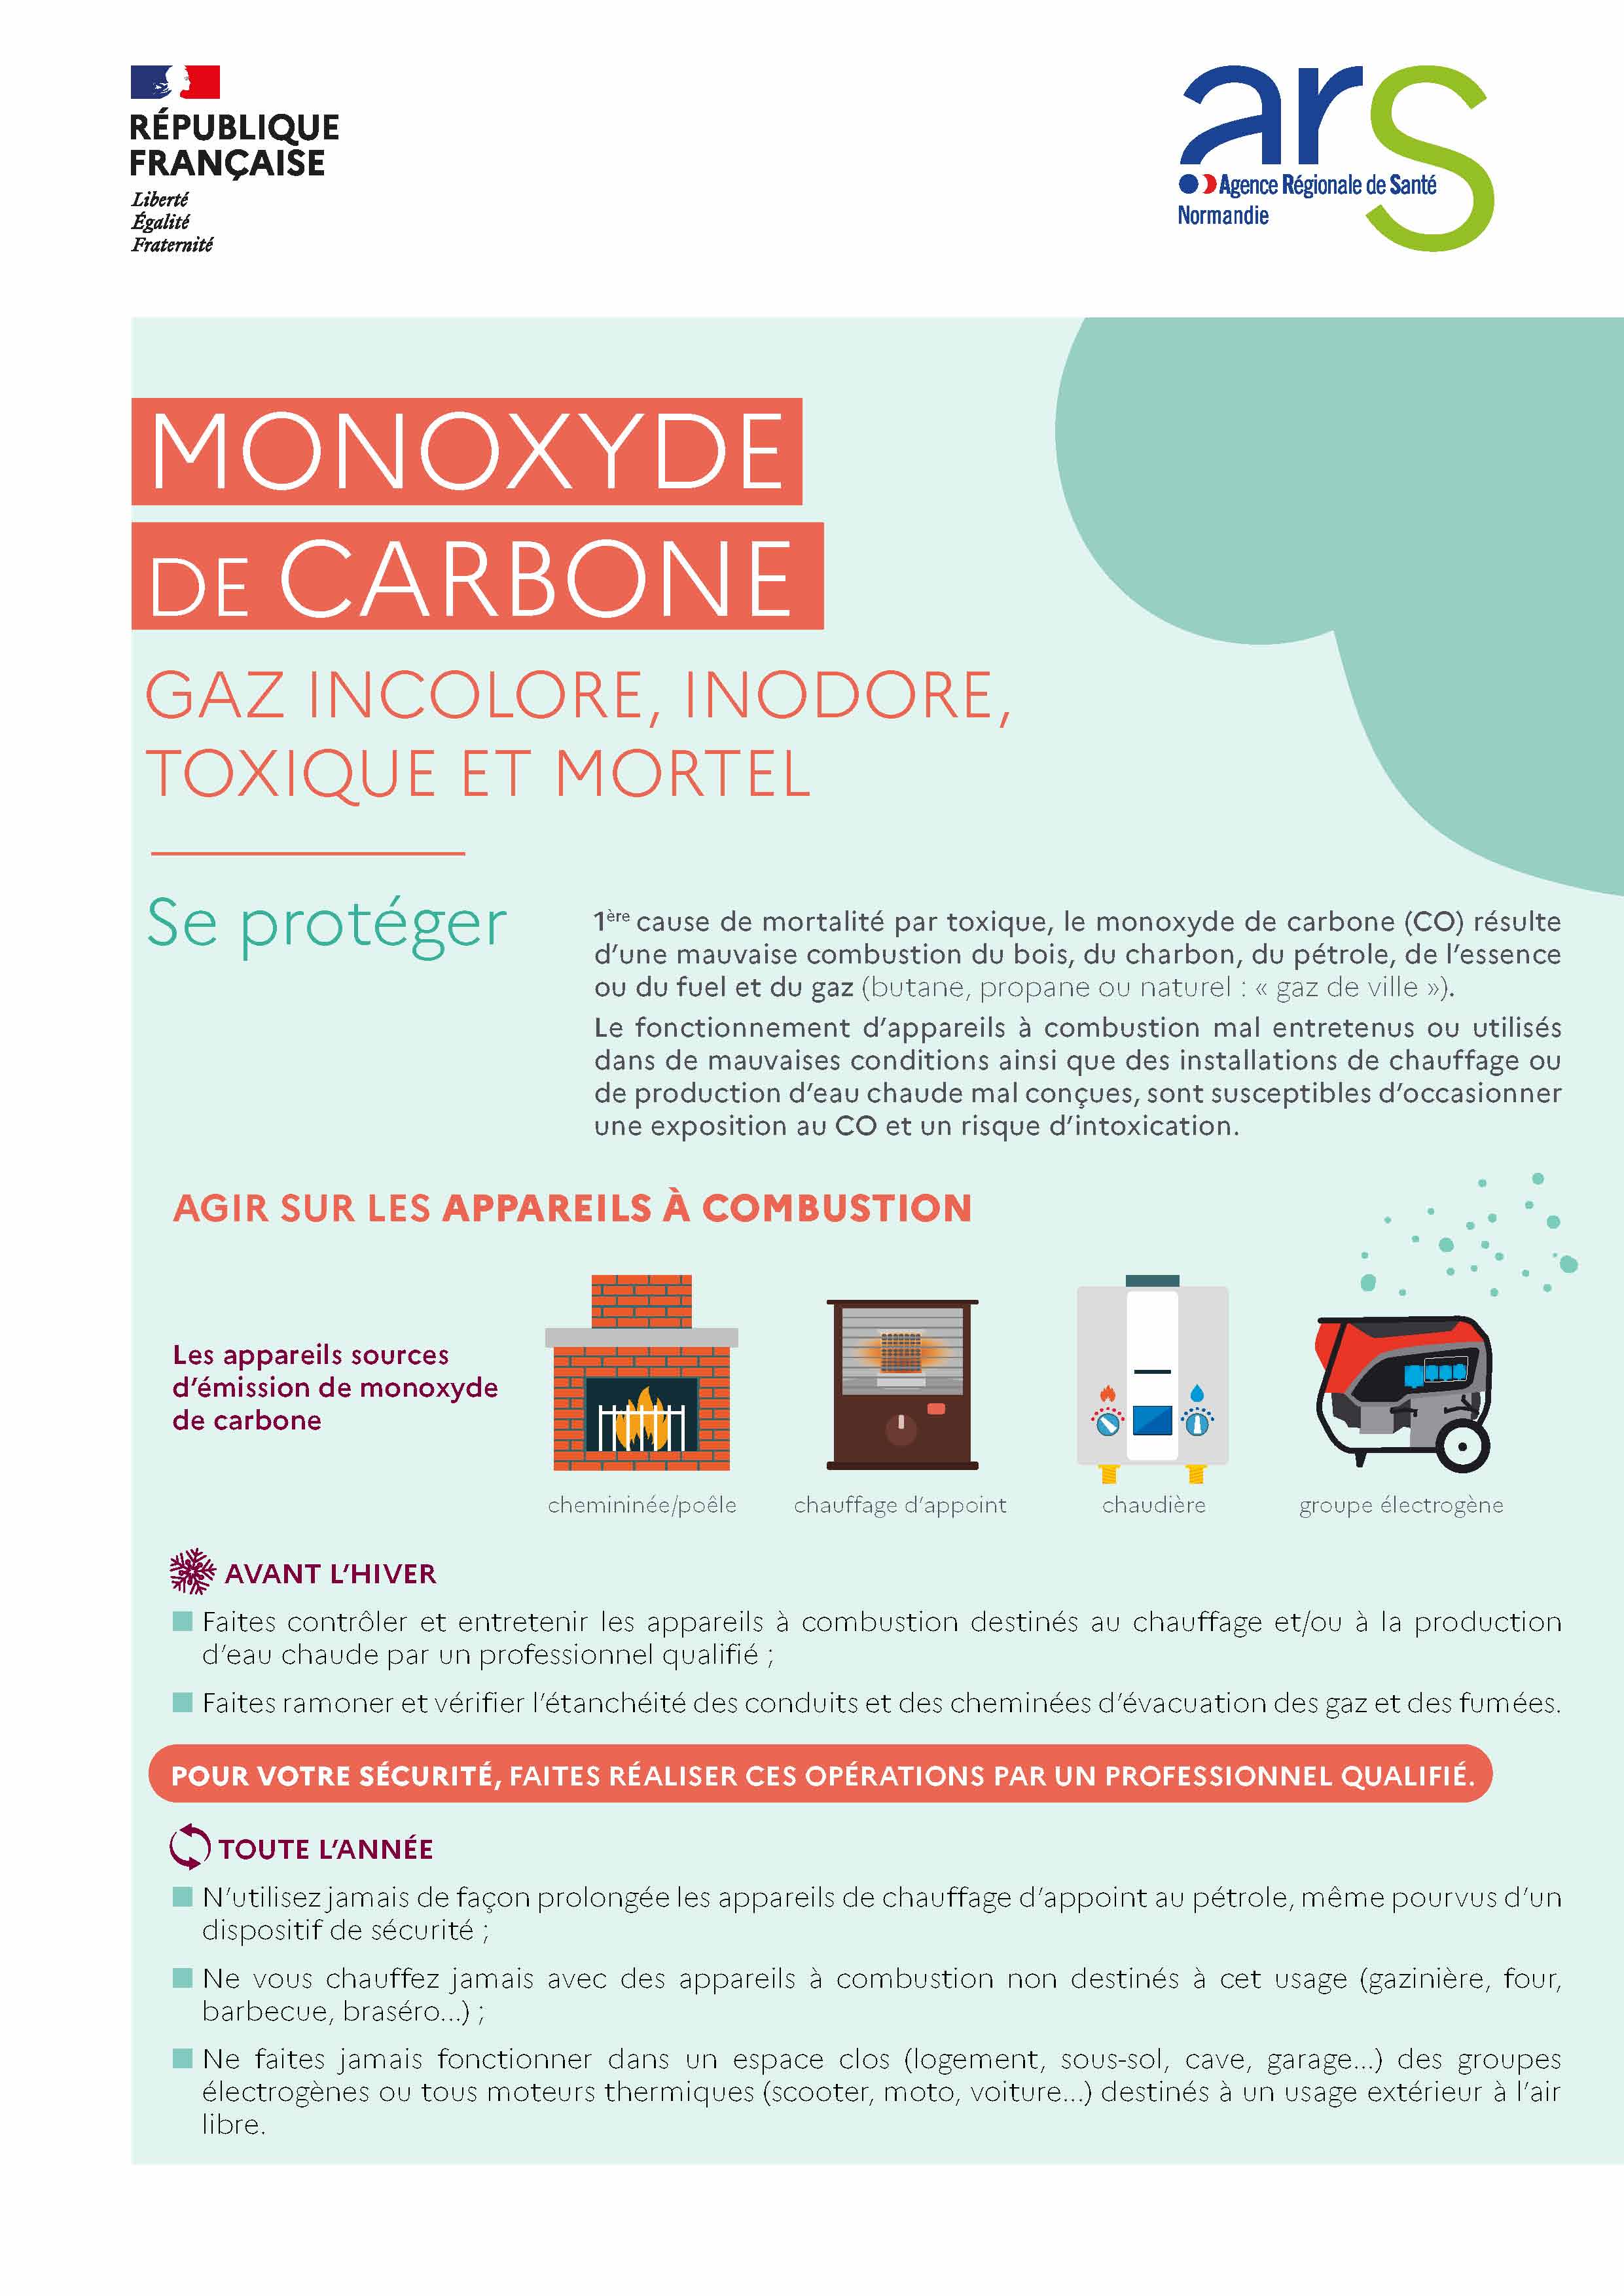 Attention au monoxyde de carbone, monoxyde de carbone 